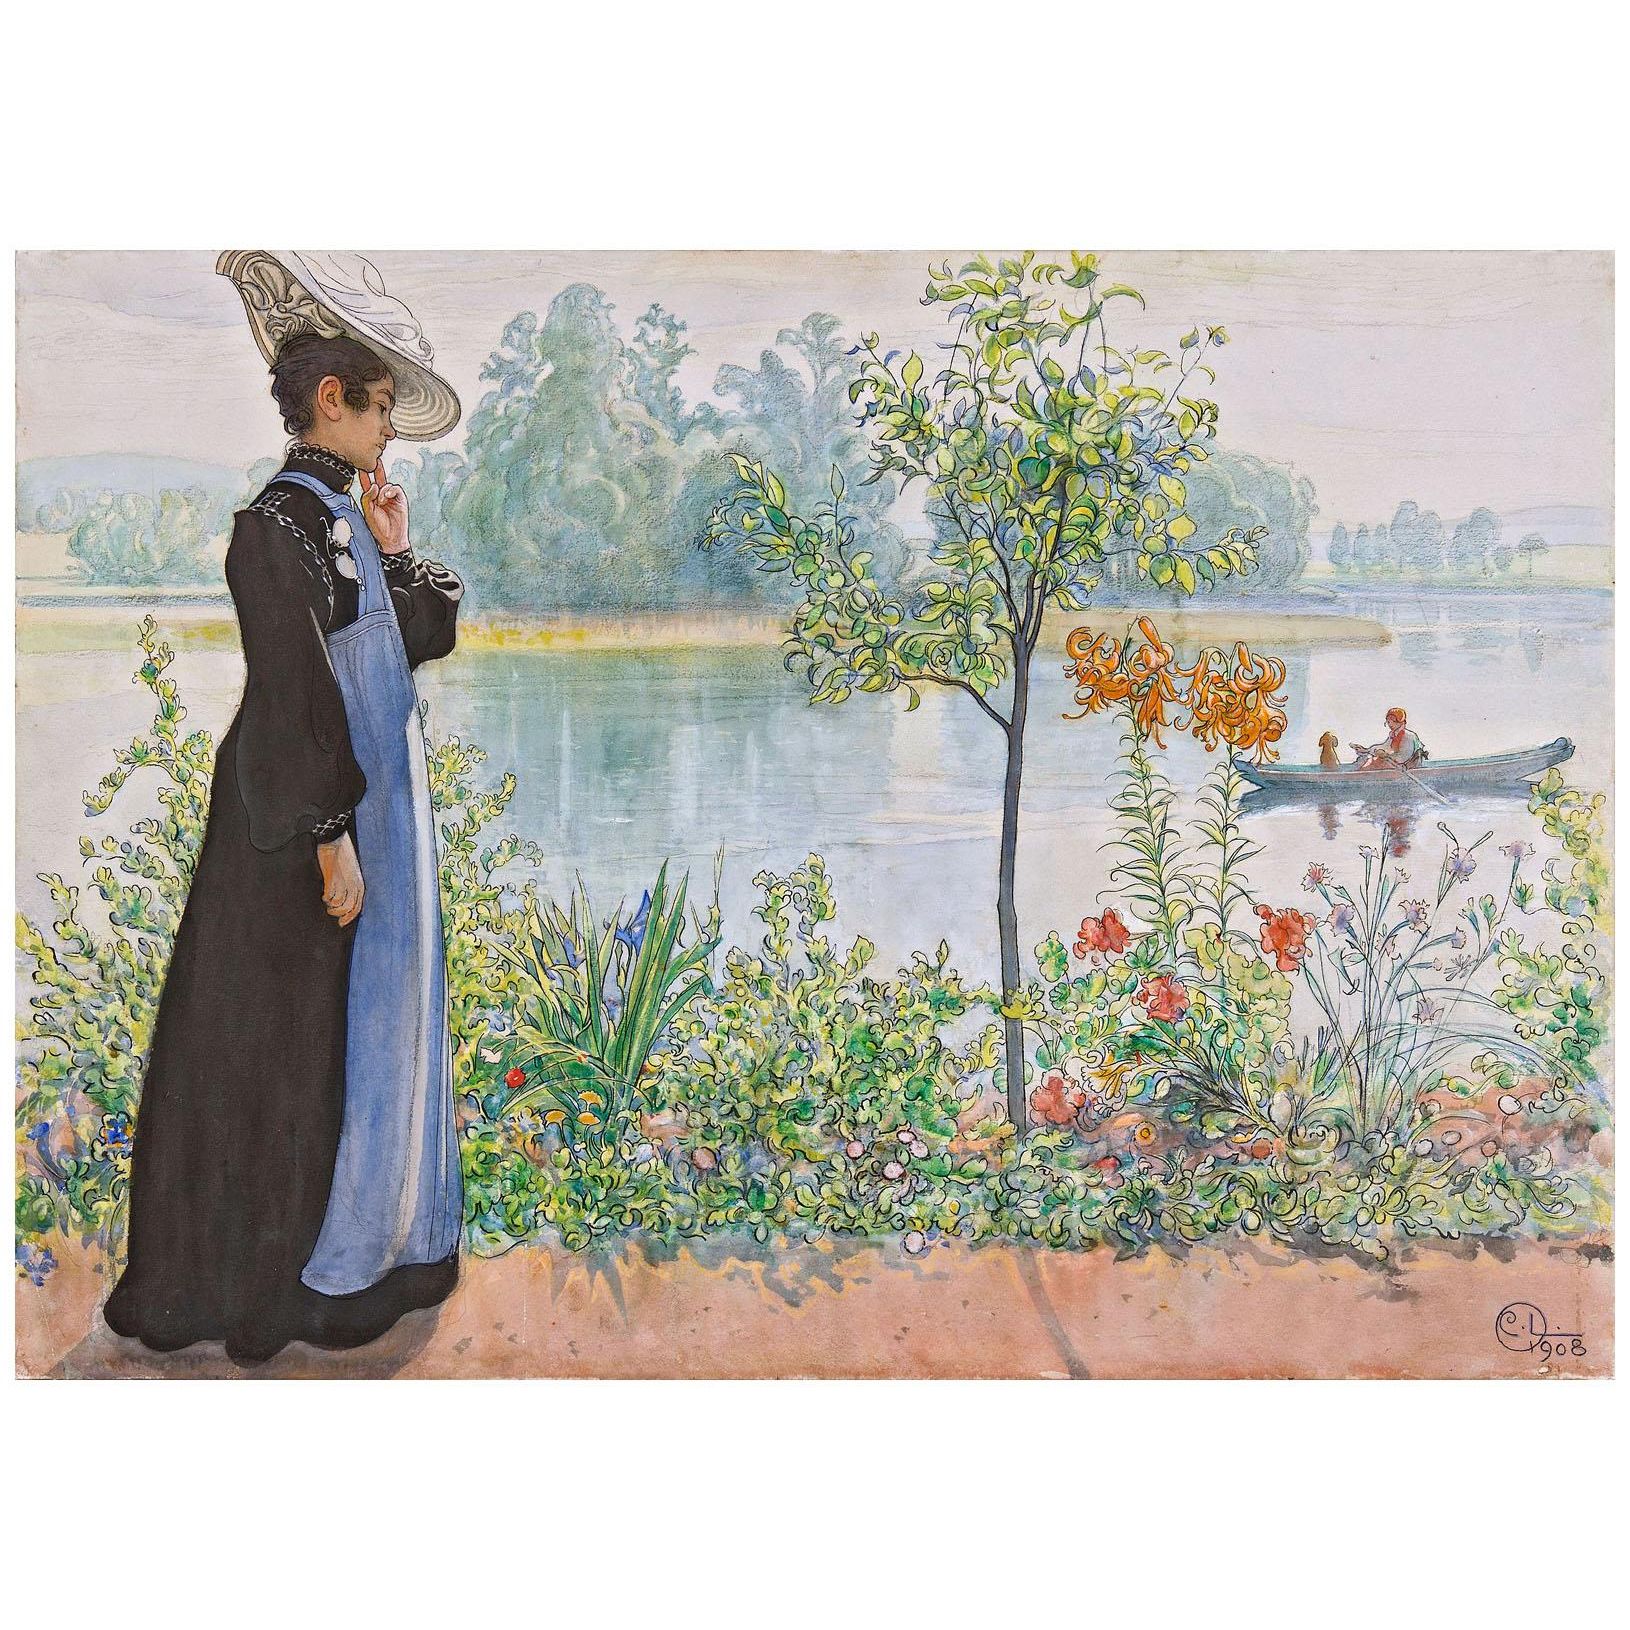 Carl Larsson. Karin by the Shore. 1908. Malmo Art Museum